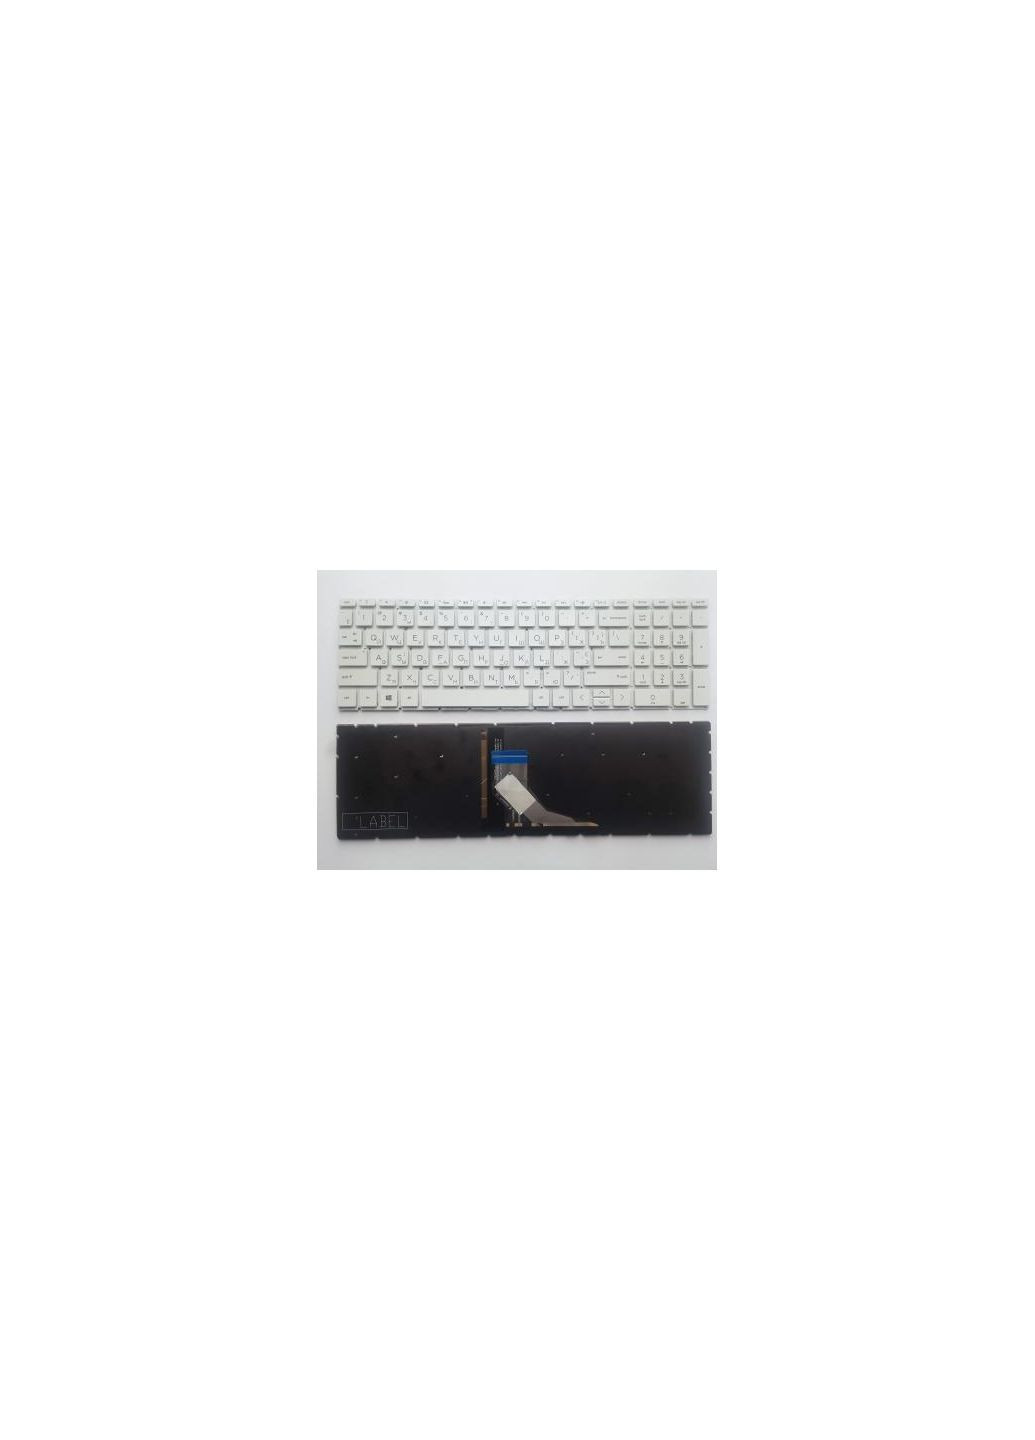 Клавиатура ноутбука Pavilion SleekBook 15DA 250 G7, 255 G7 Series белая с подсв (A46146) HP pavilion sleekbook 15-da 250 g7, 255 g7 series бел (276706754)